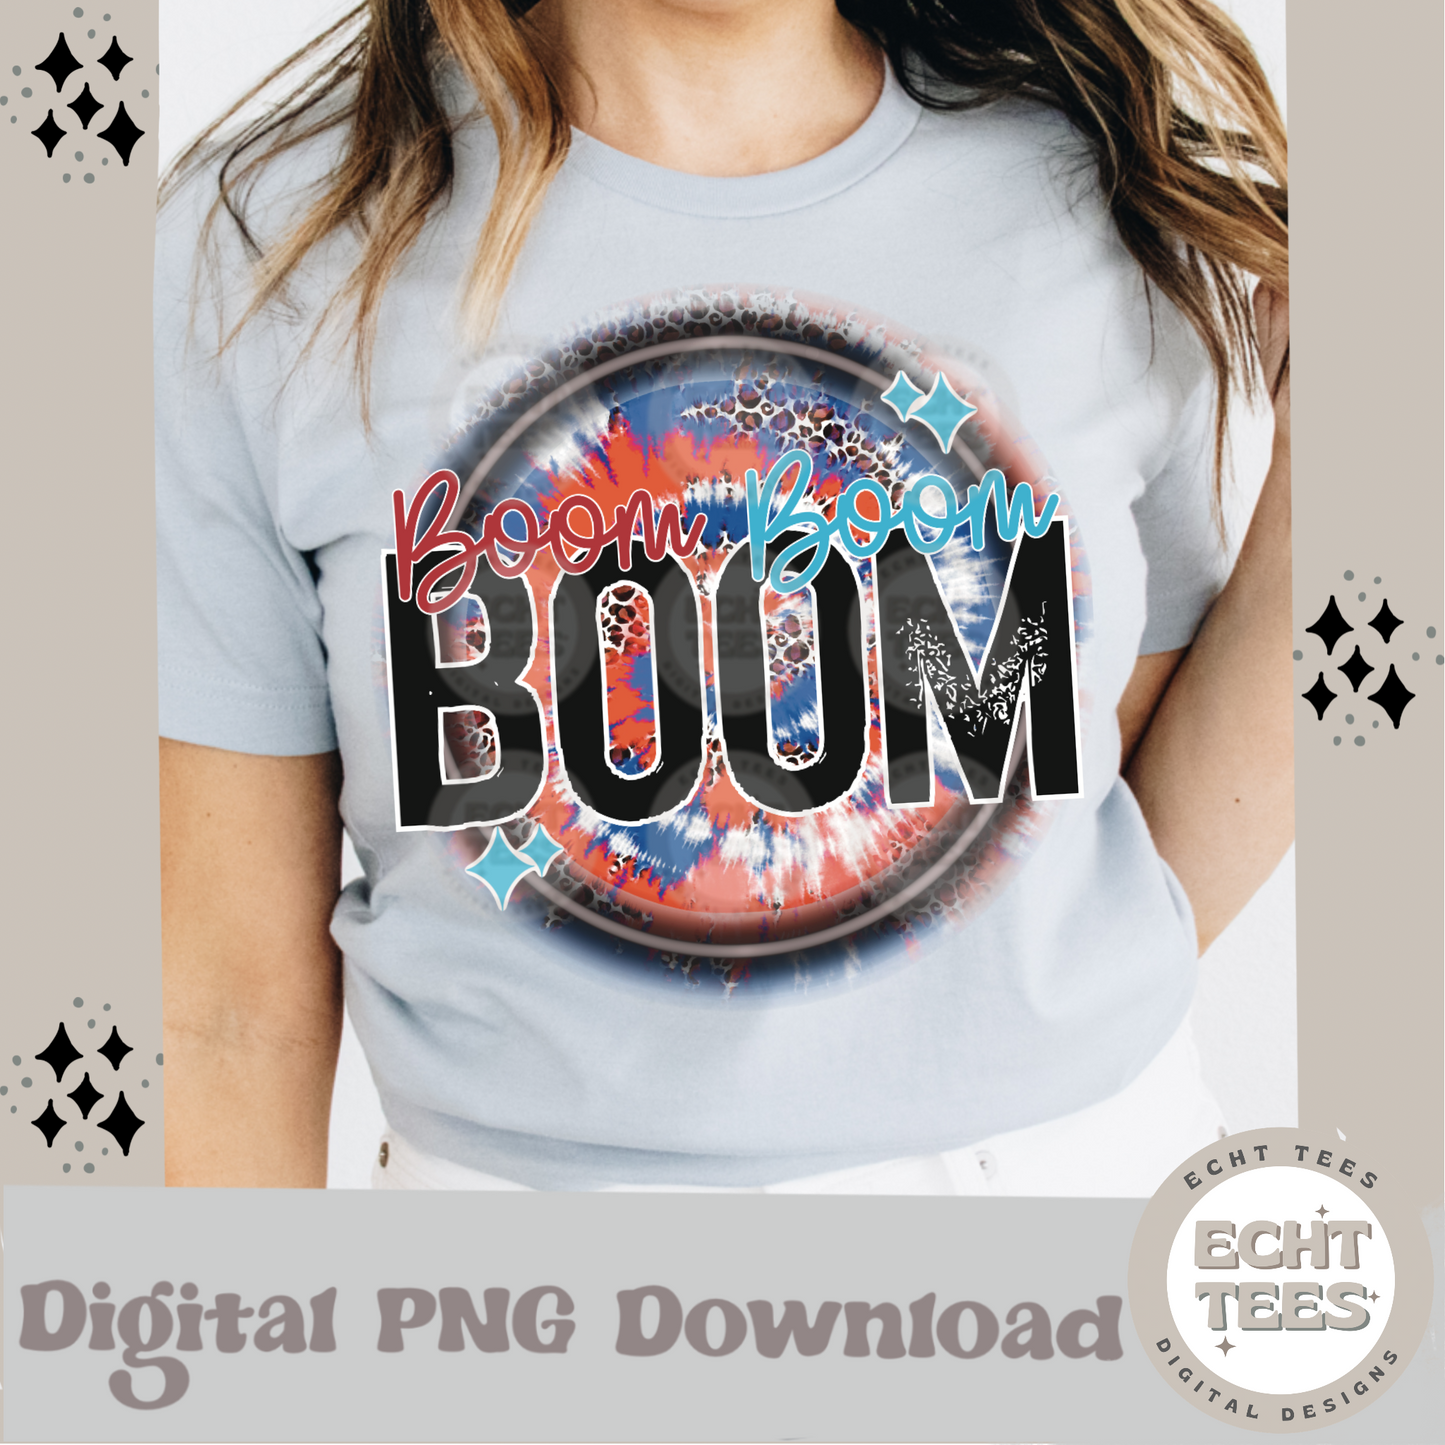 Boom Boom Boom PNG Digital Download